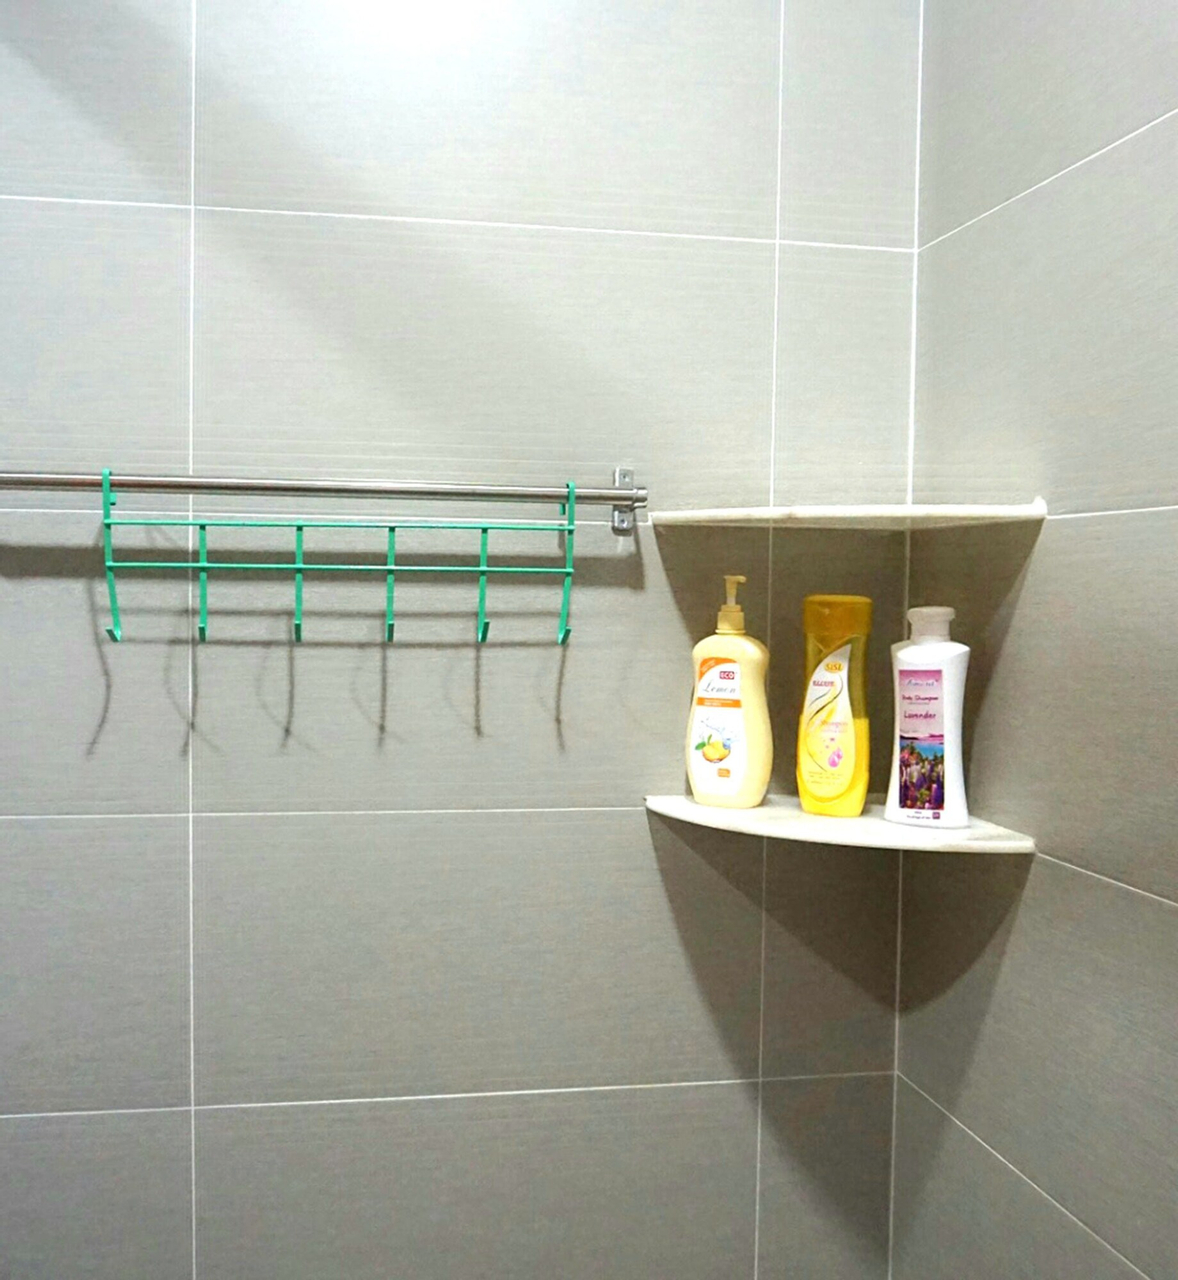 Bathroom amenities